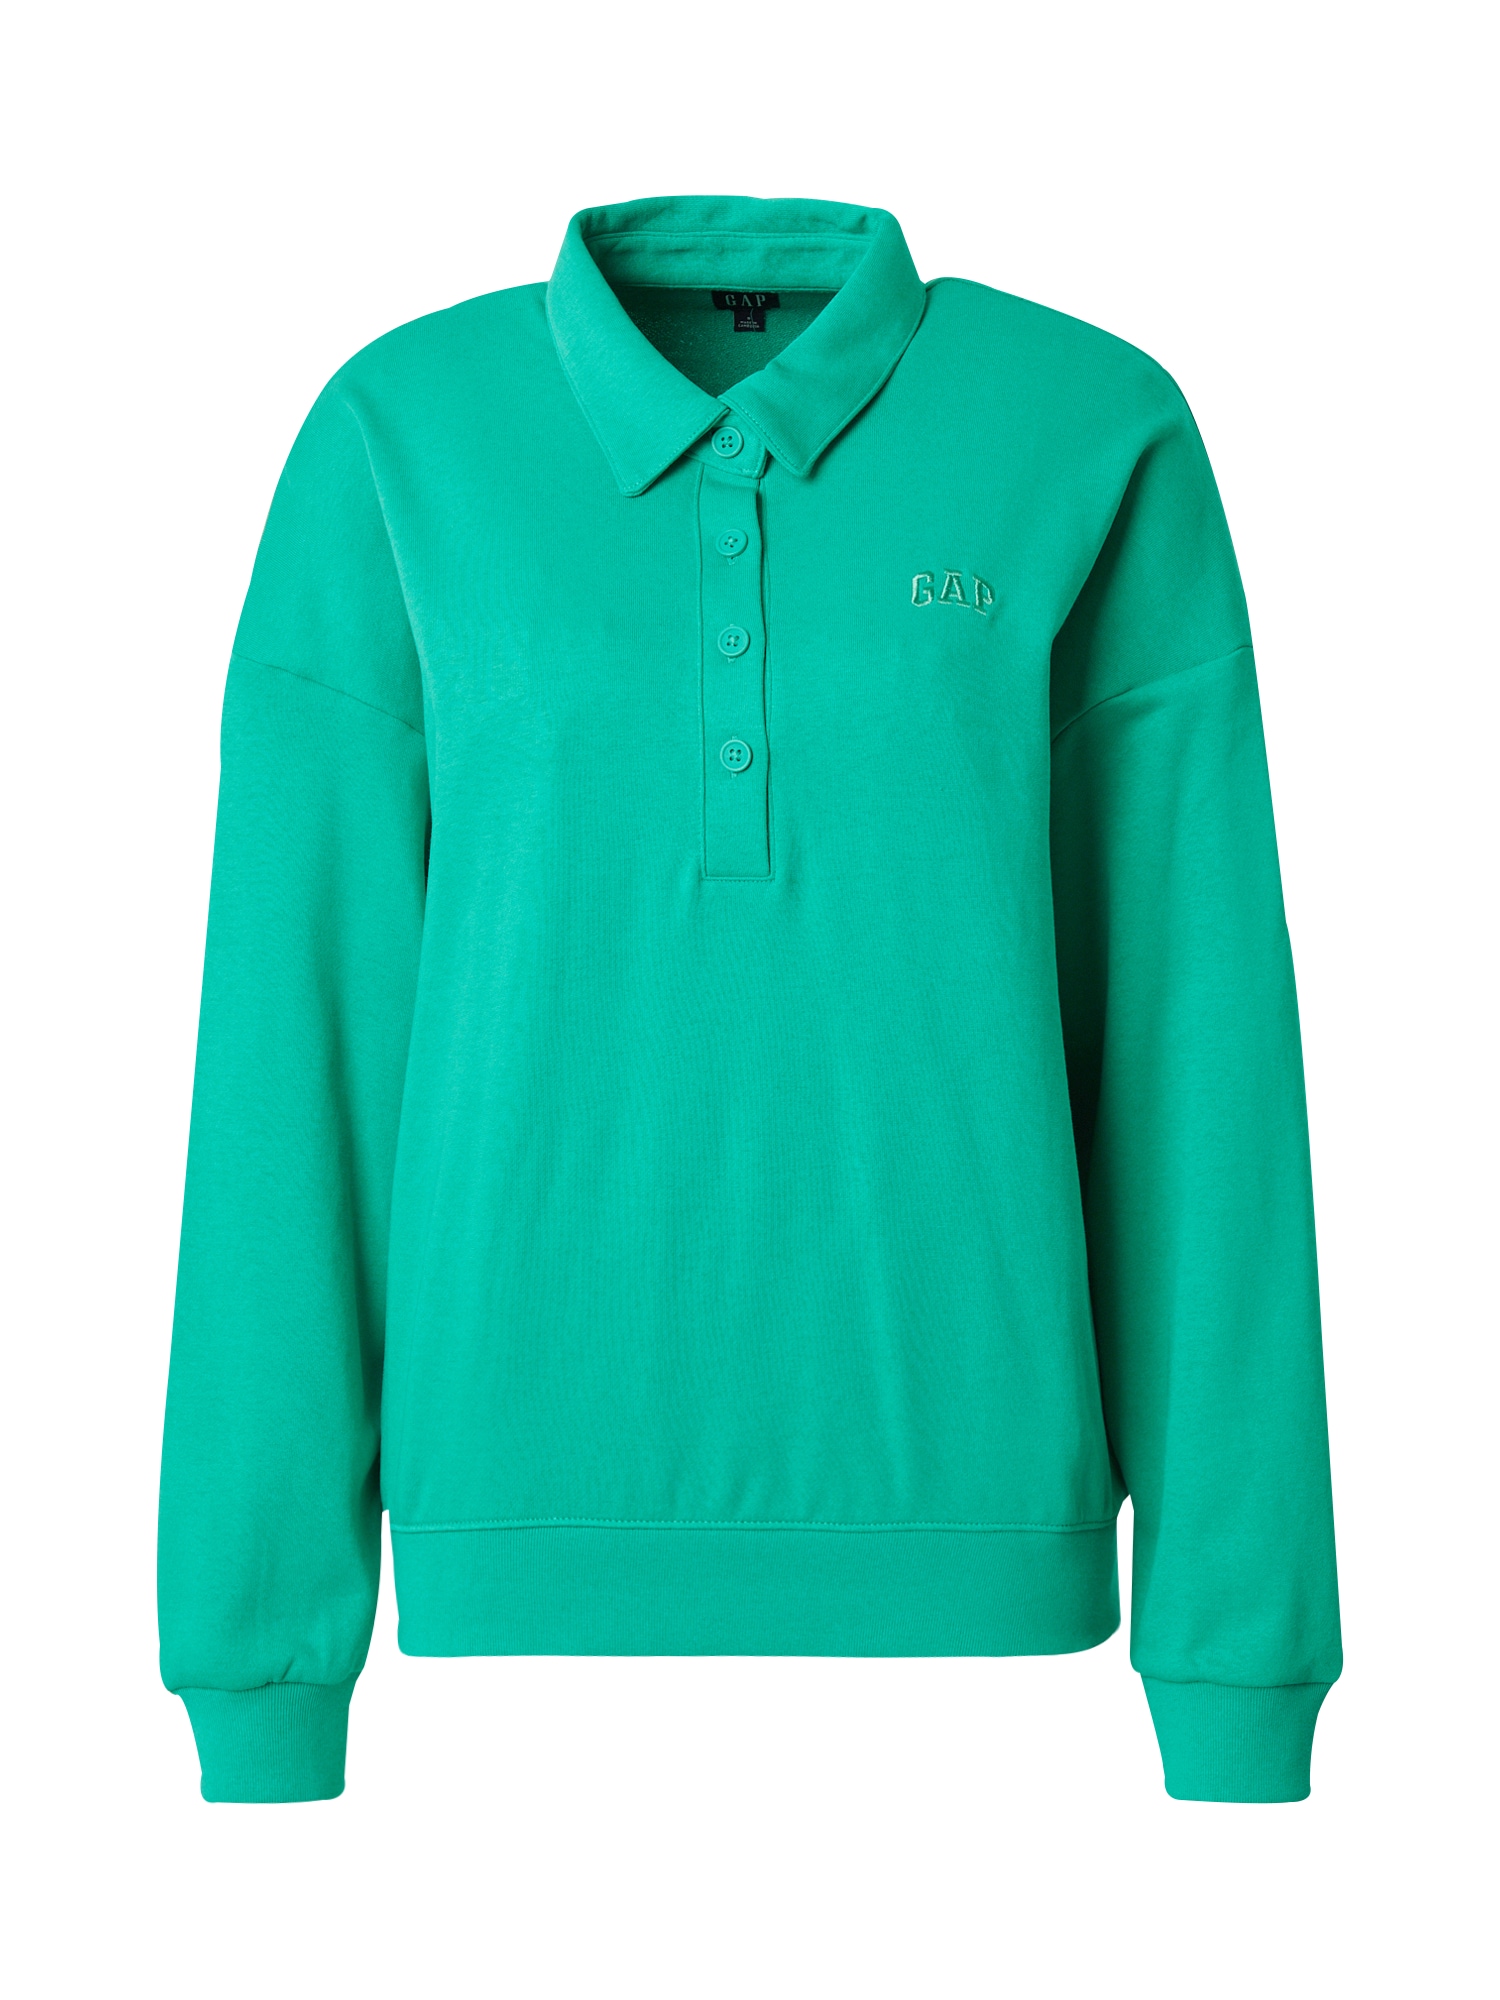 GAP Sweater majica  smaragdno zelena